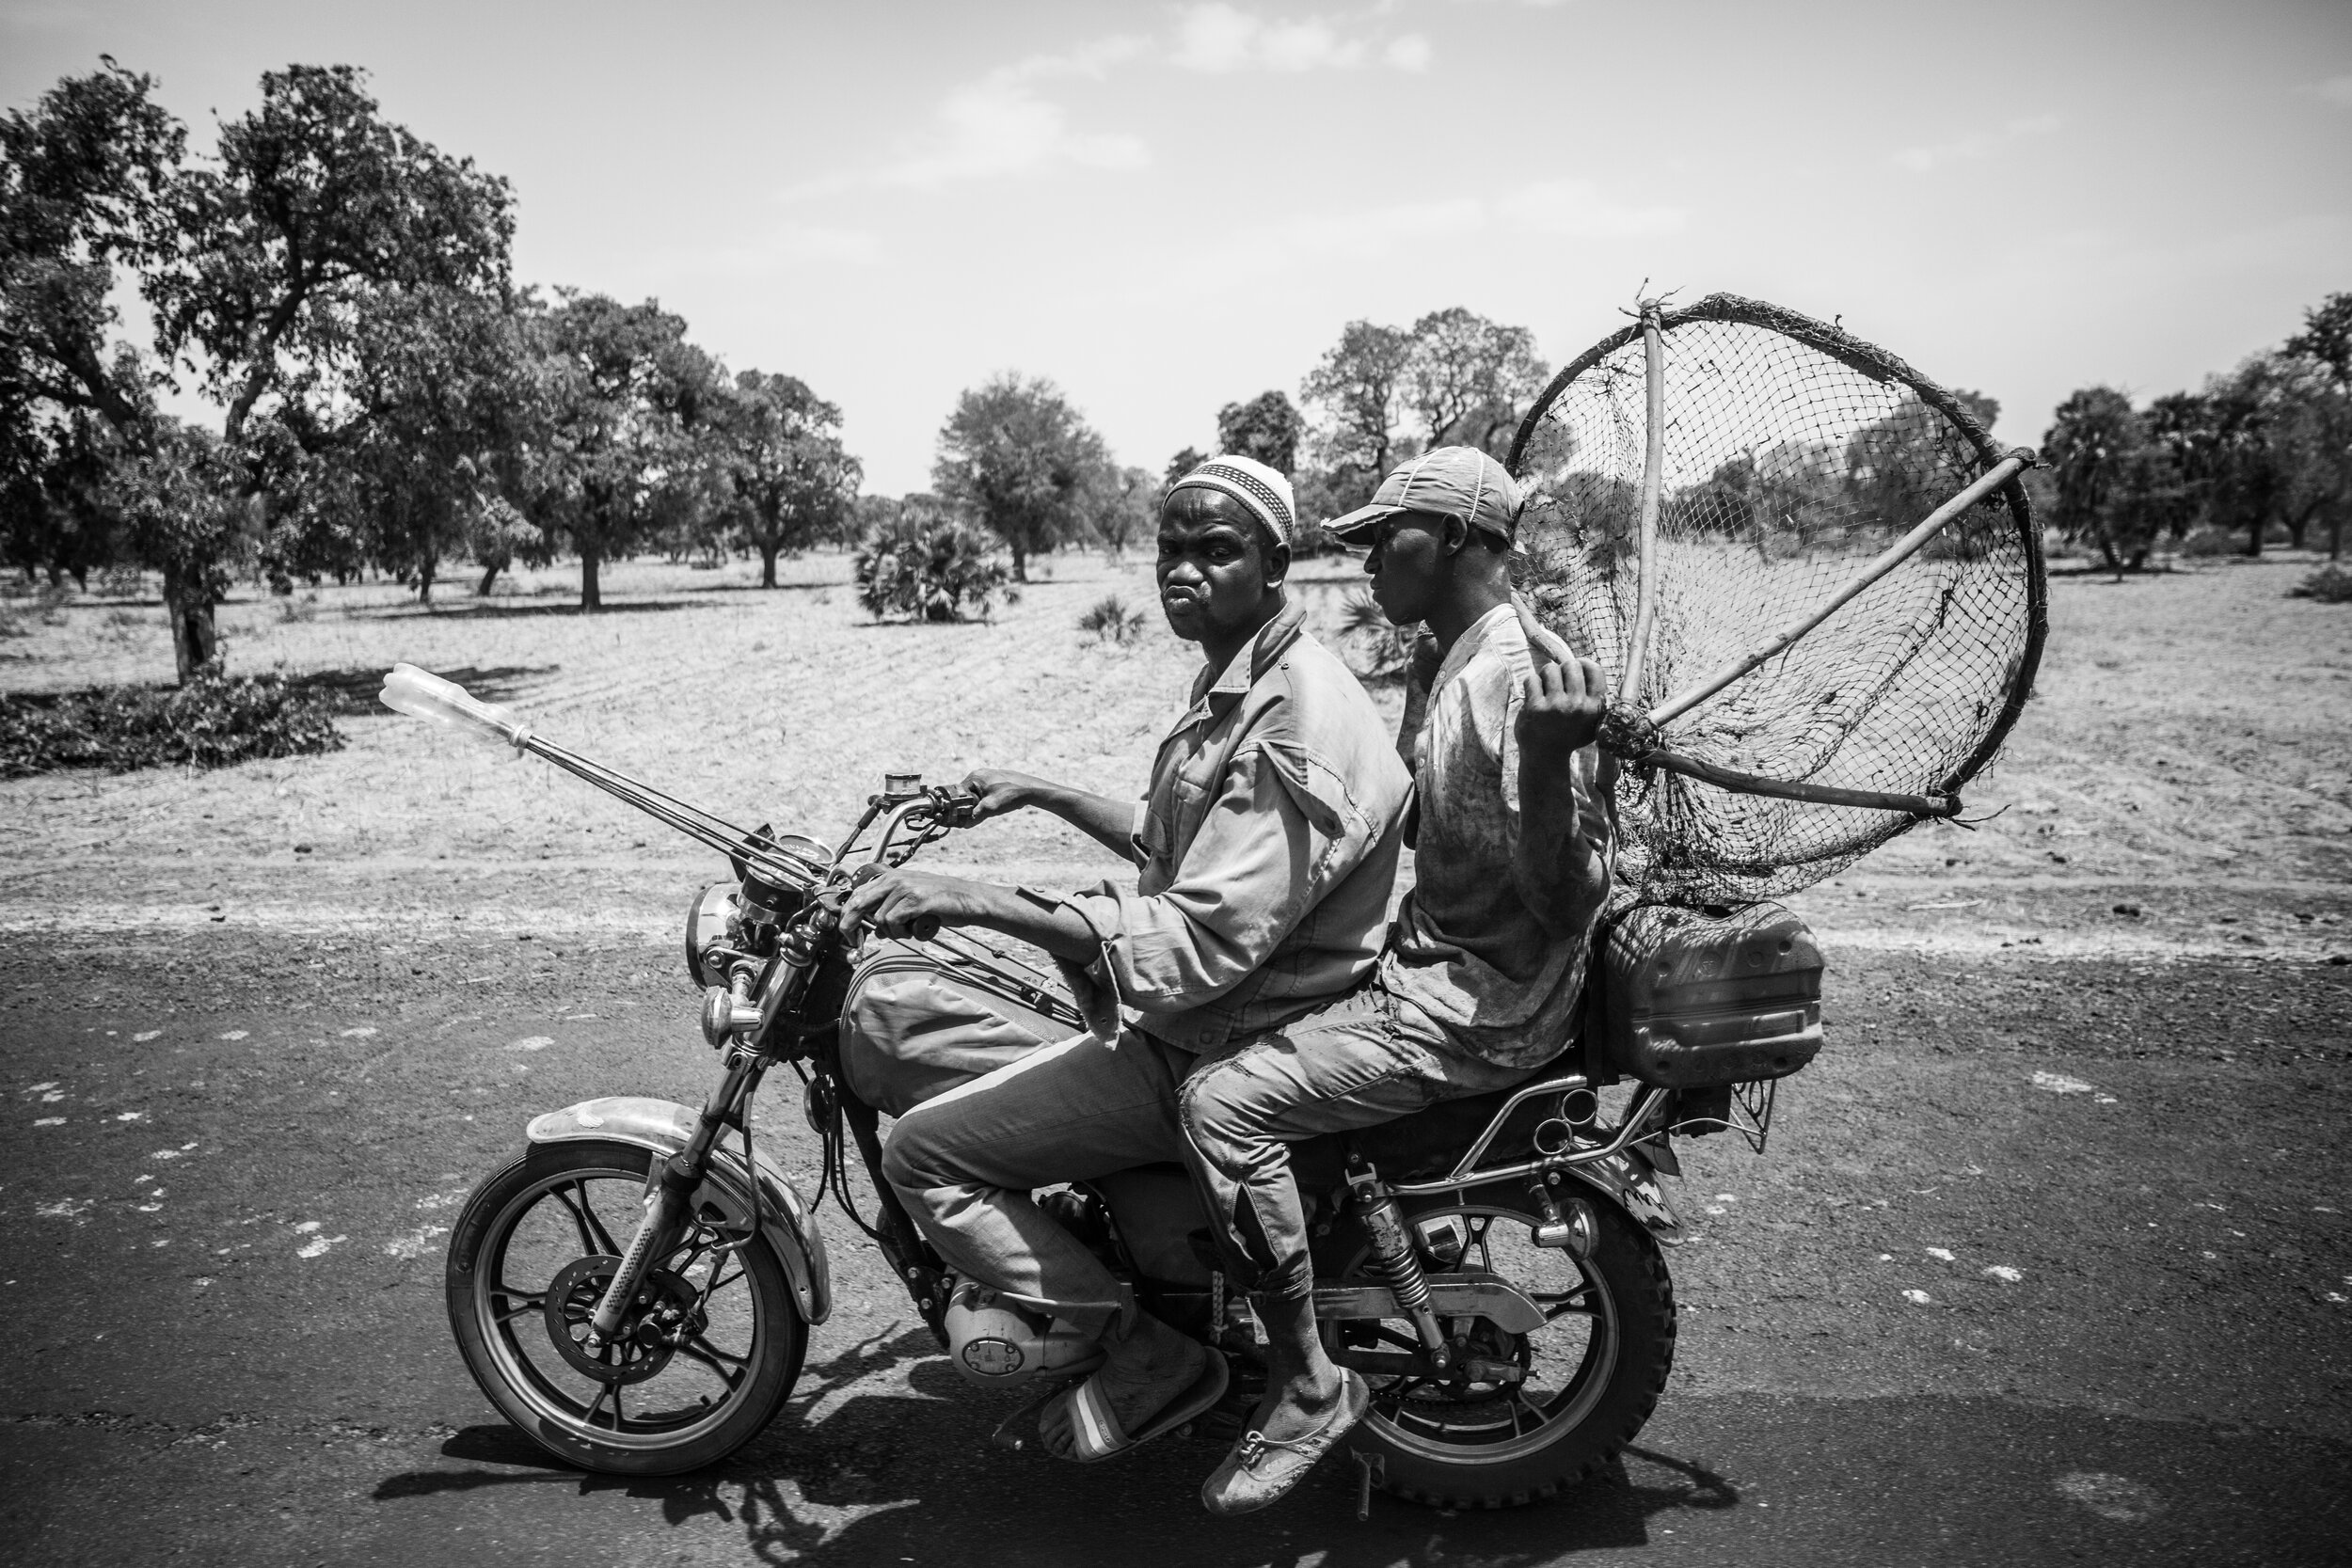  Segoukoro, Segou, Mali, 2016 